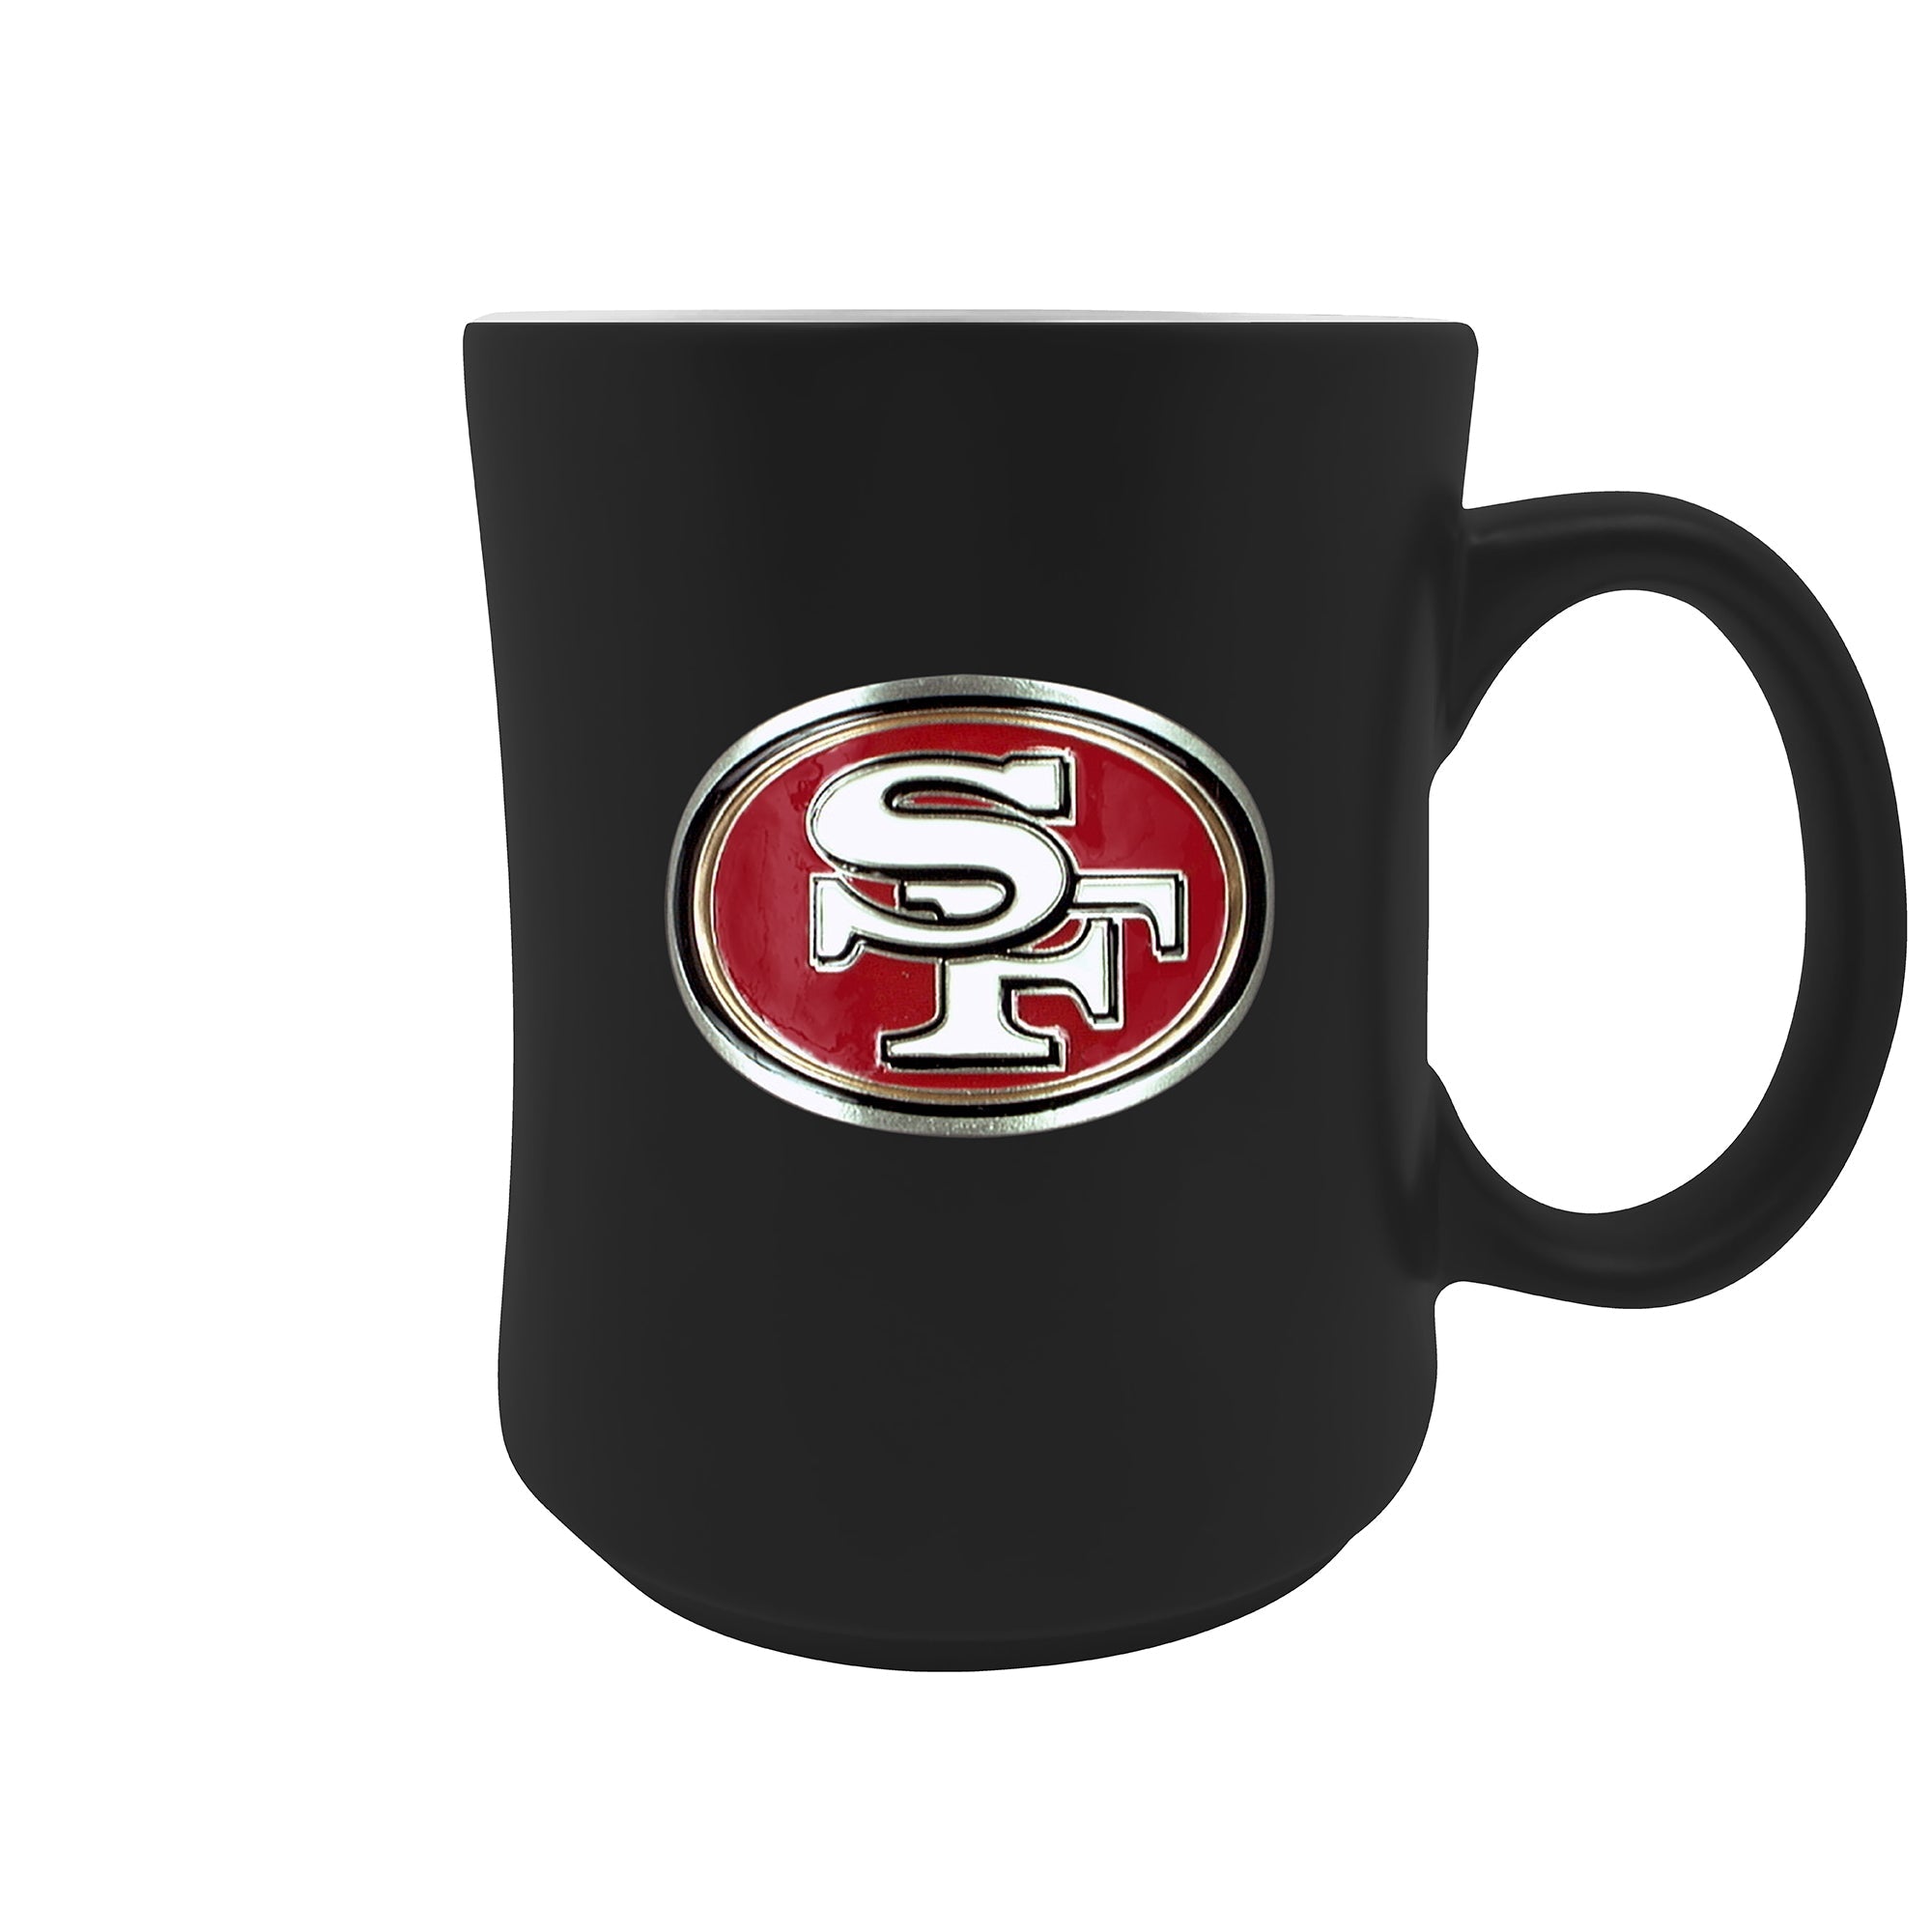 Buy NFL Sculpted Coffee Mug, 14 Ounces, San Francisco 49ers Online